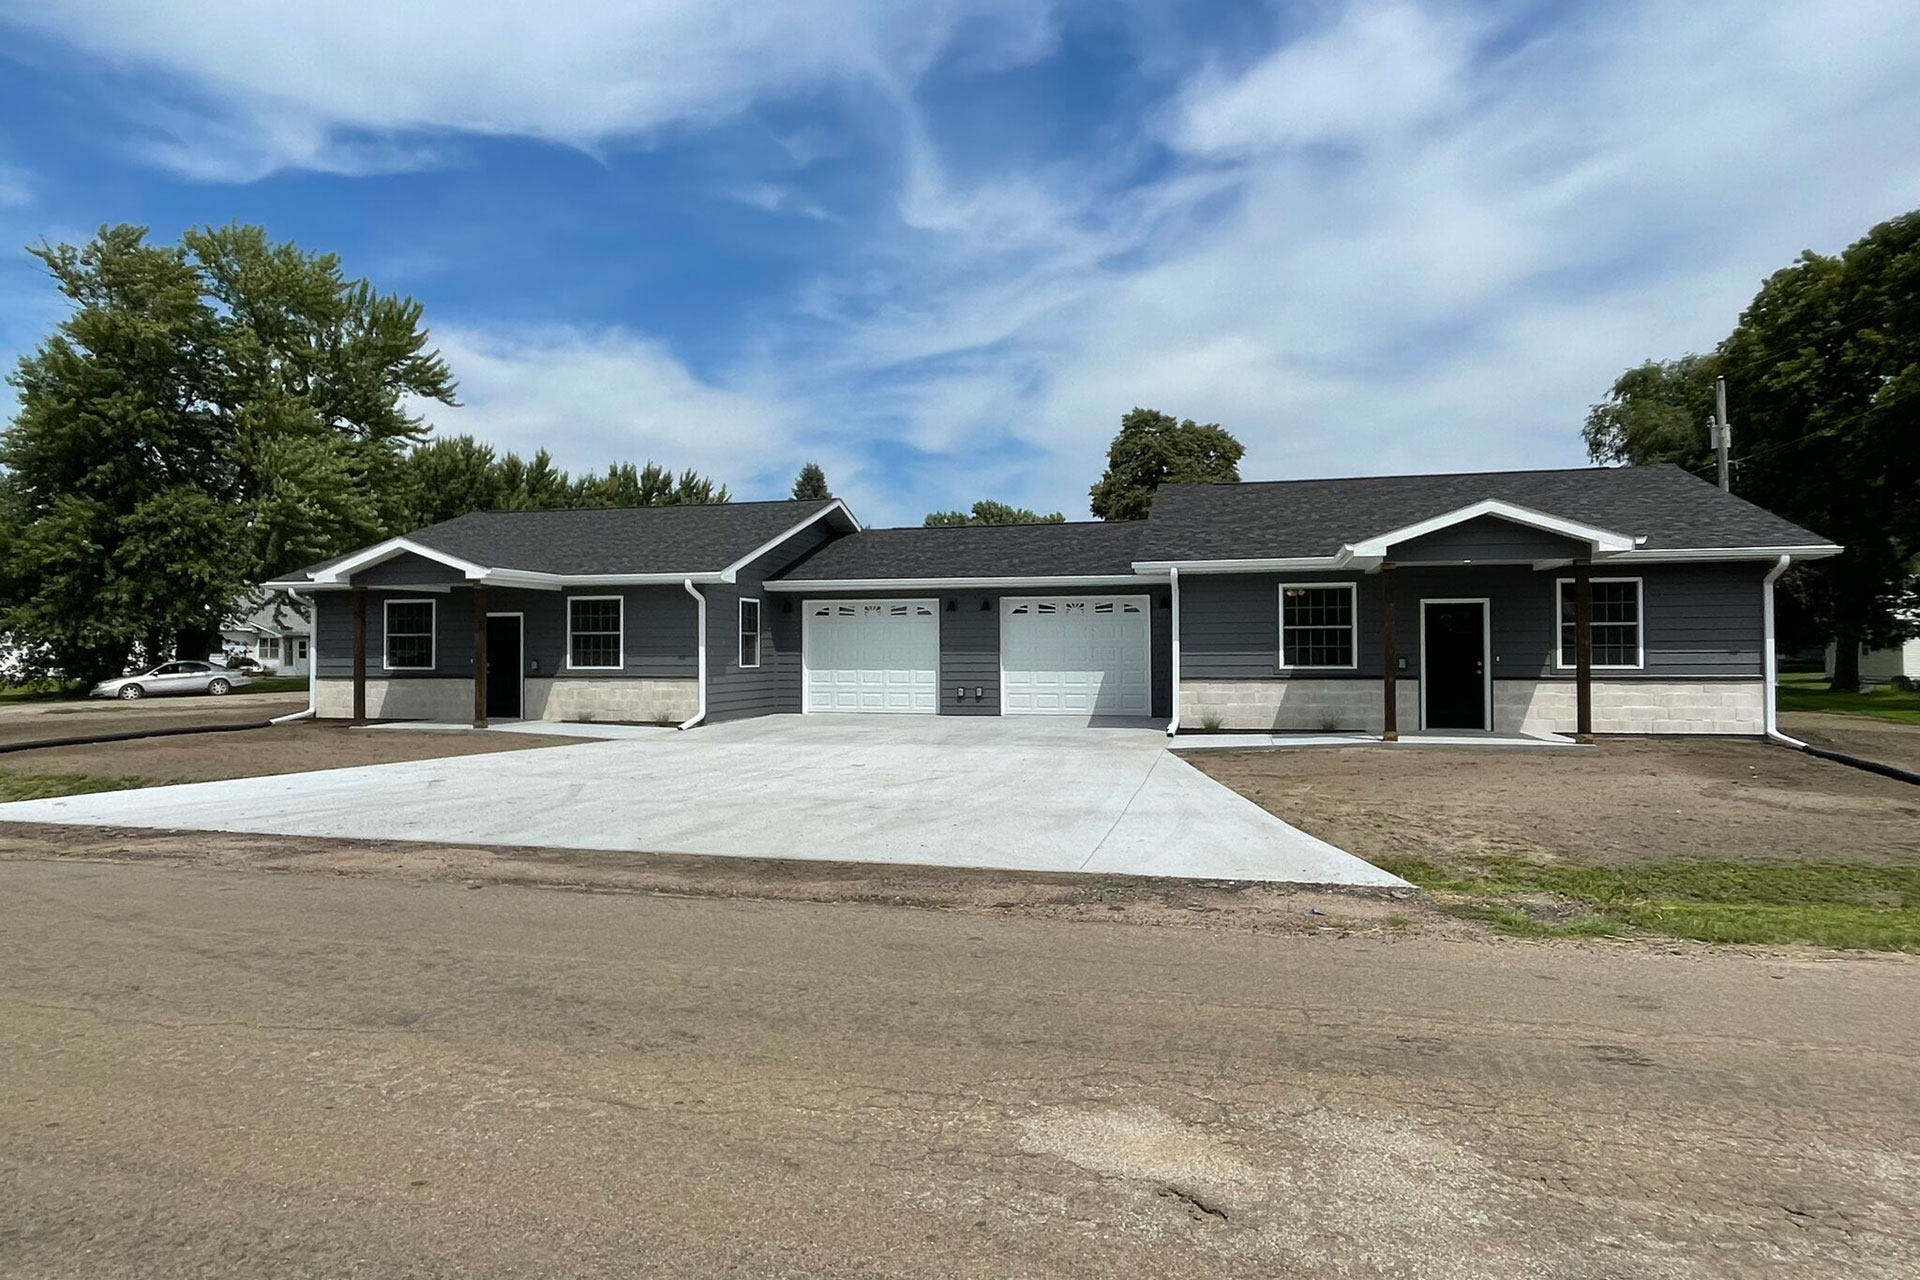 New duplex home build in Clearwater, Nebraska